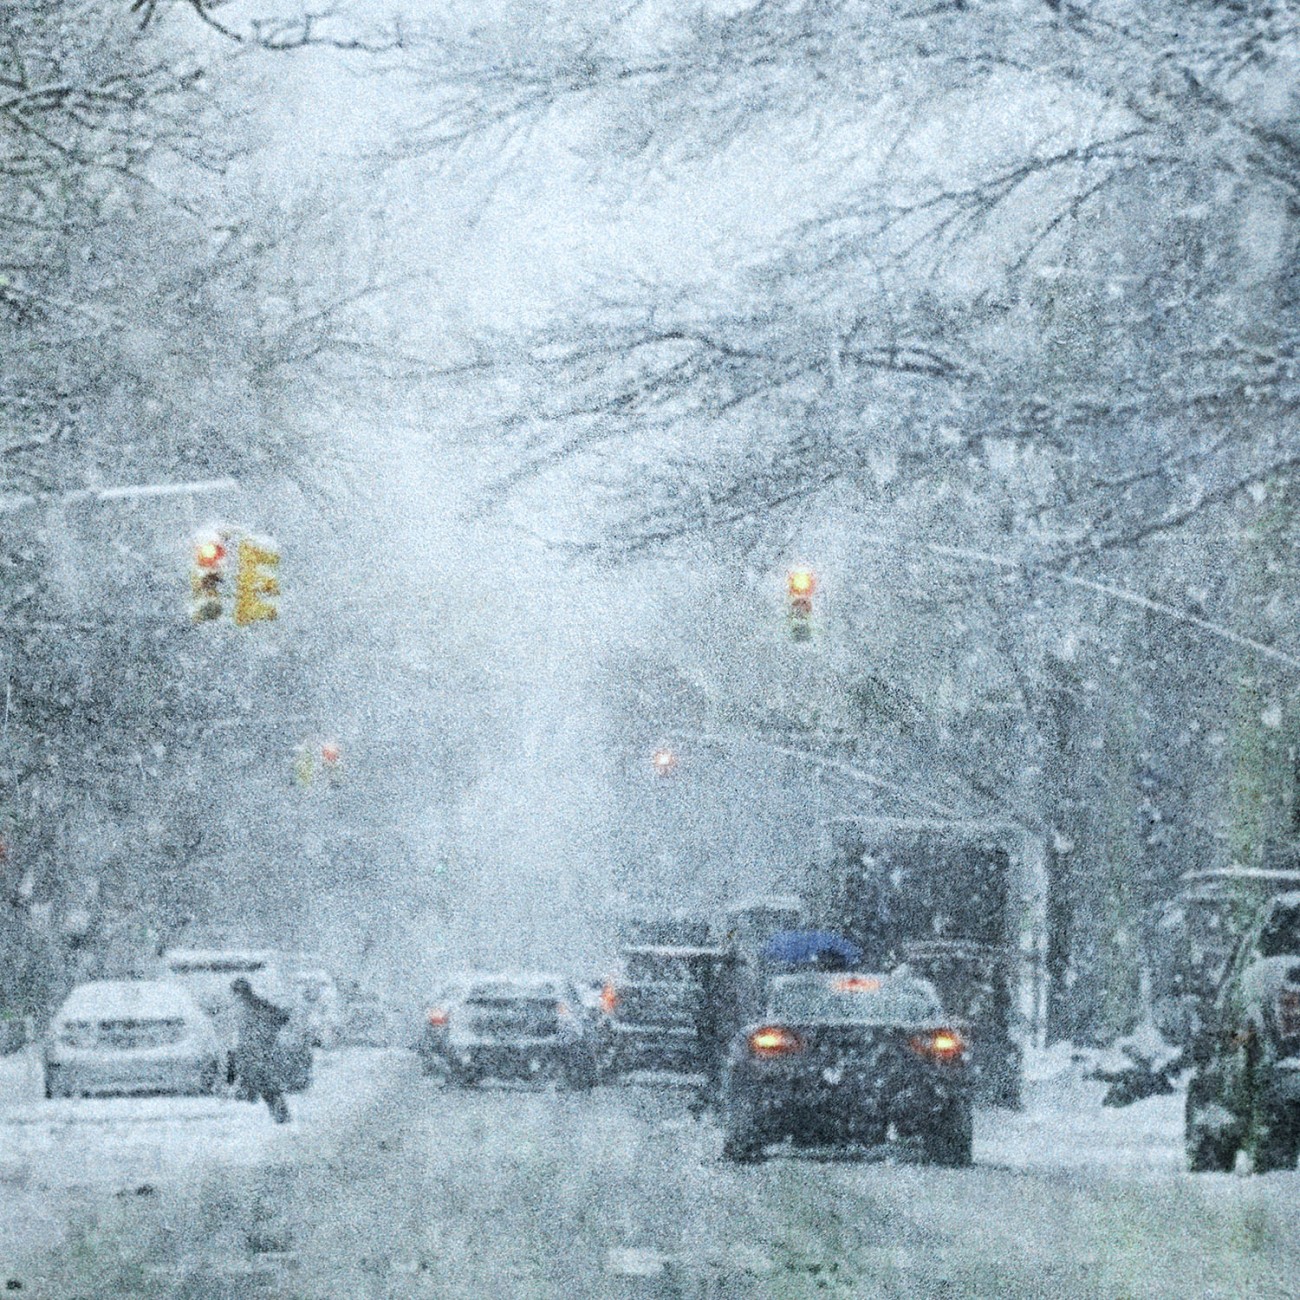 Snowy day Greenwich Village, NY, 2015